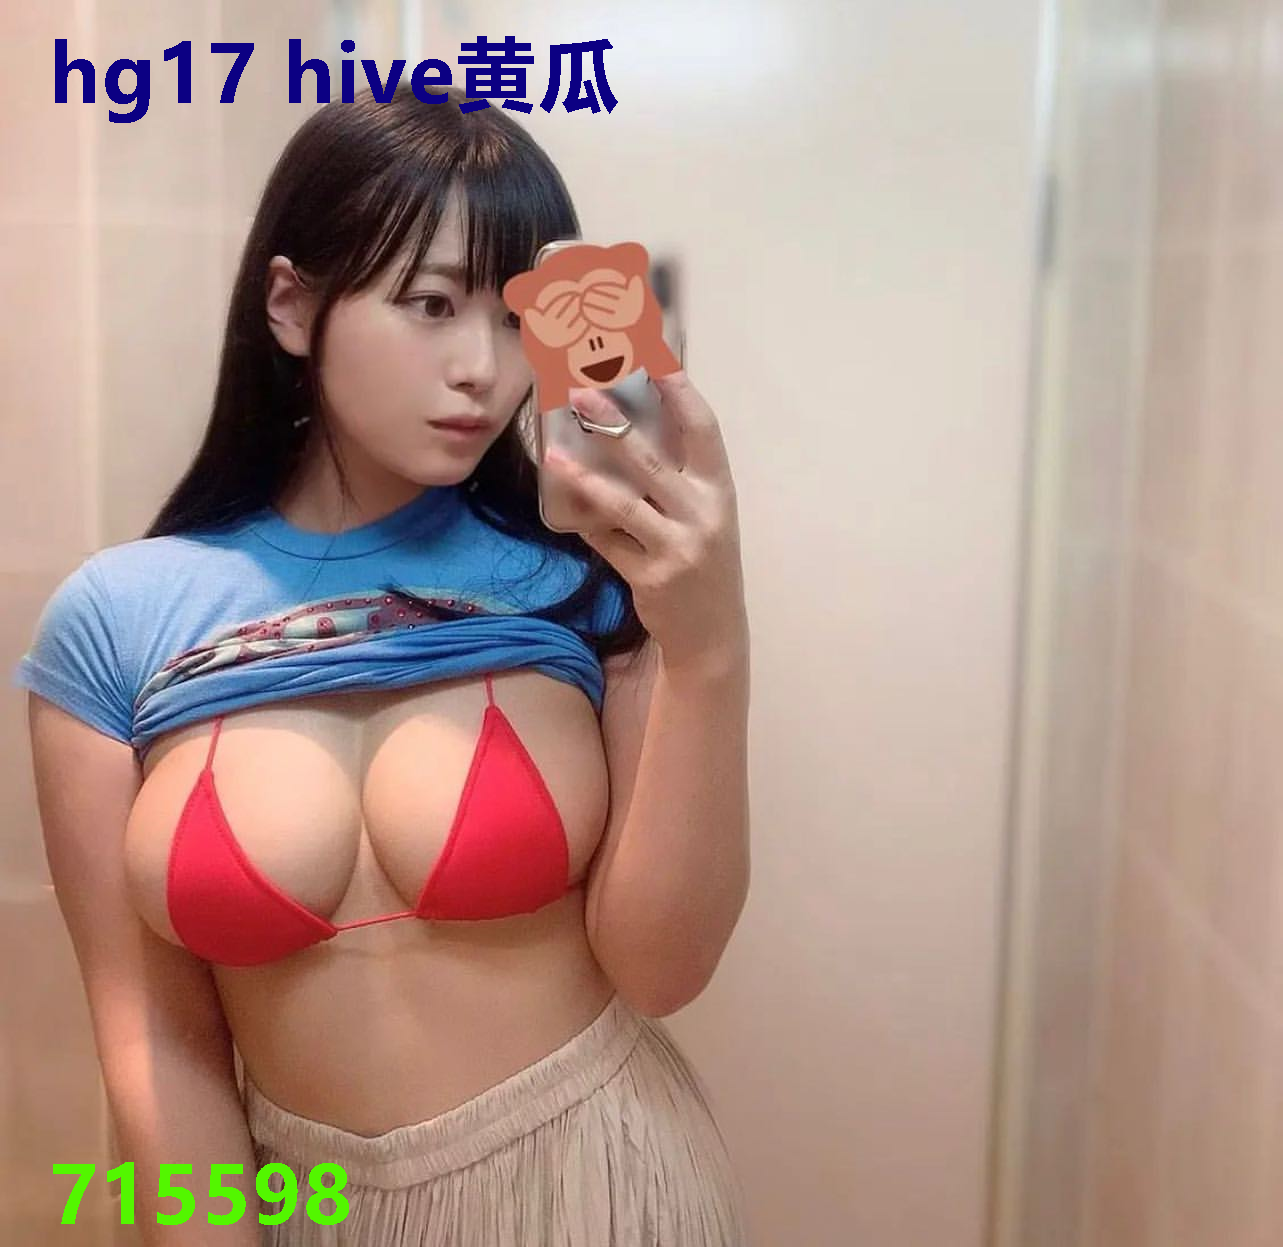 hg17 hive黄瓜